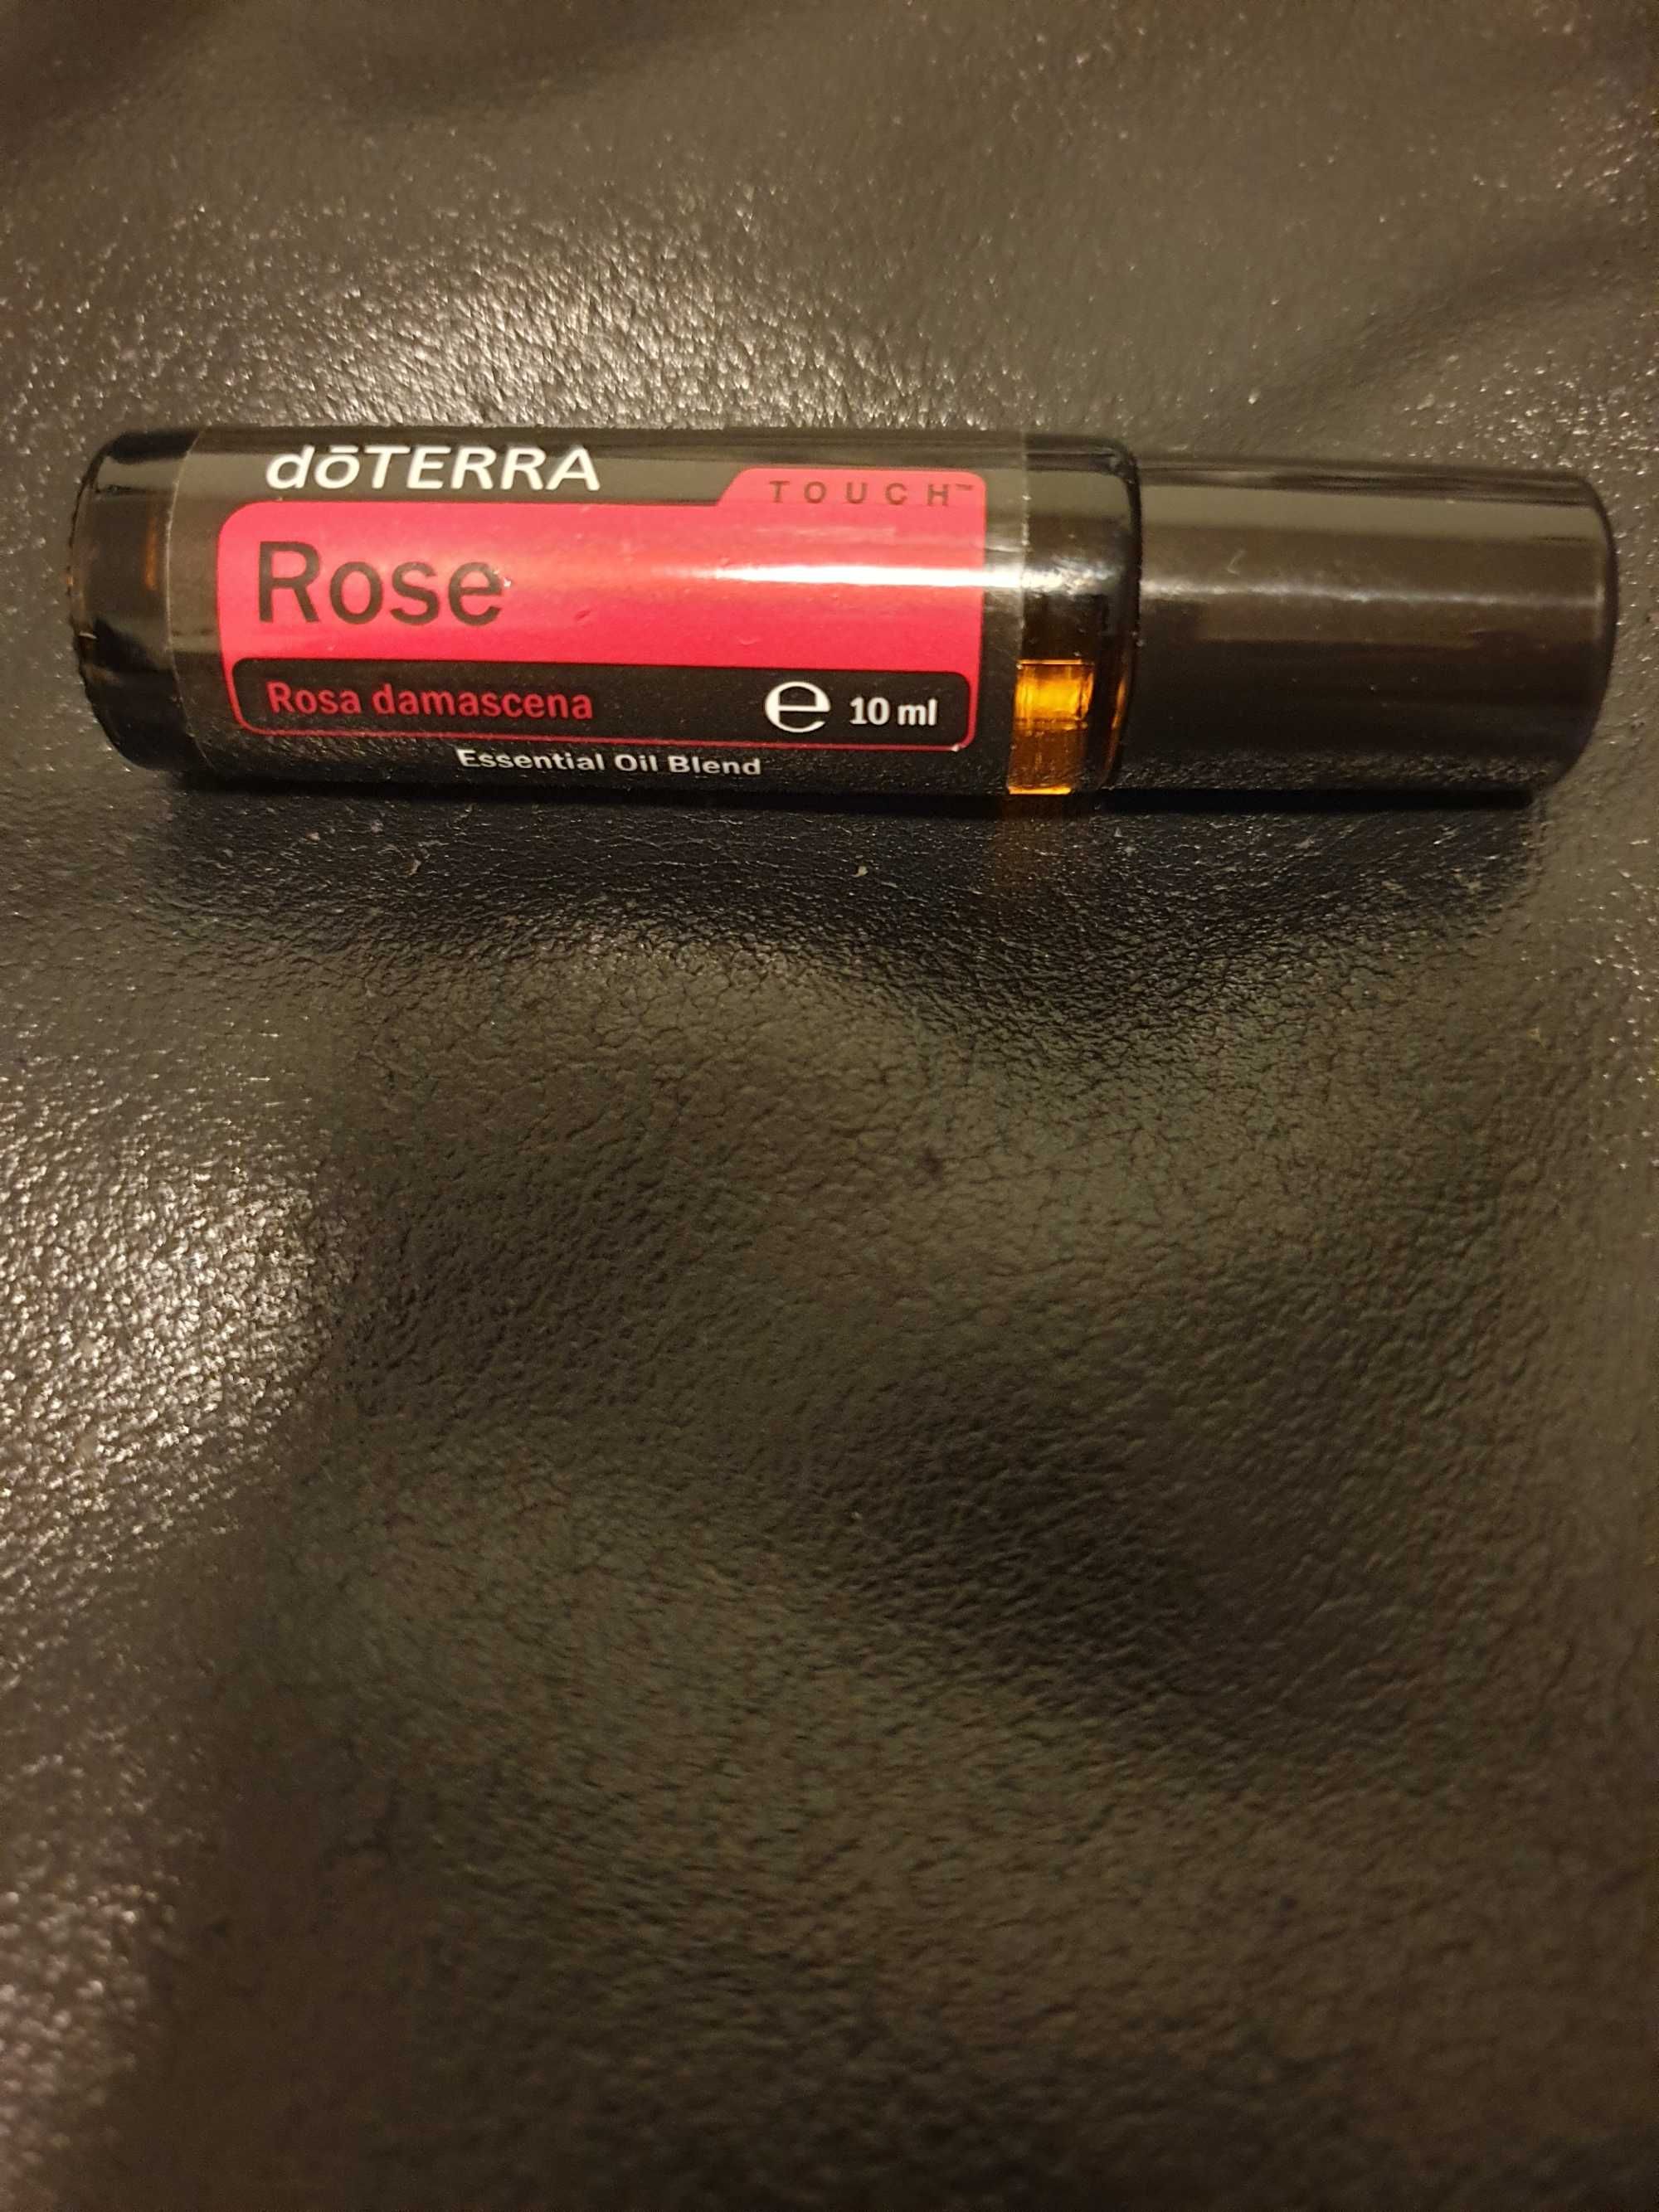 Rose touch Doterra 10 ml